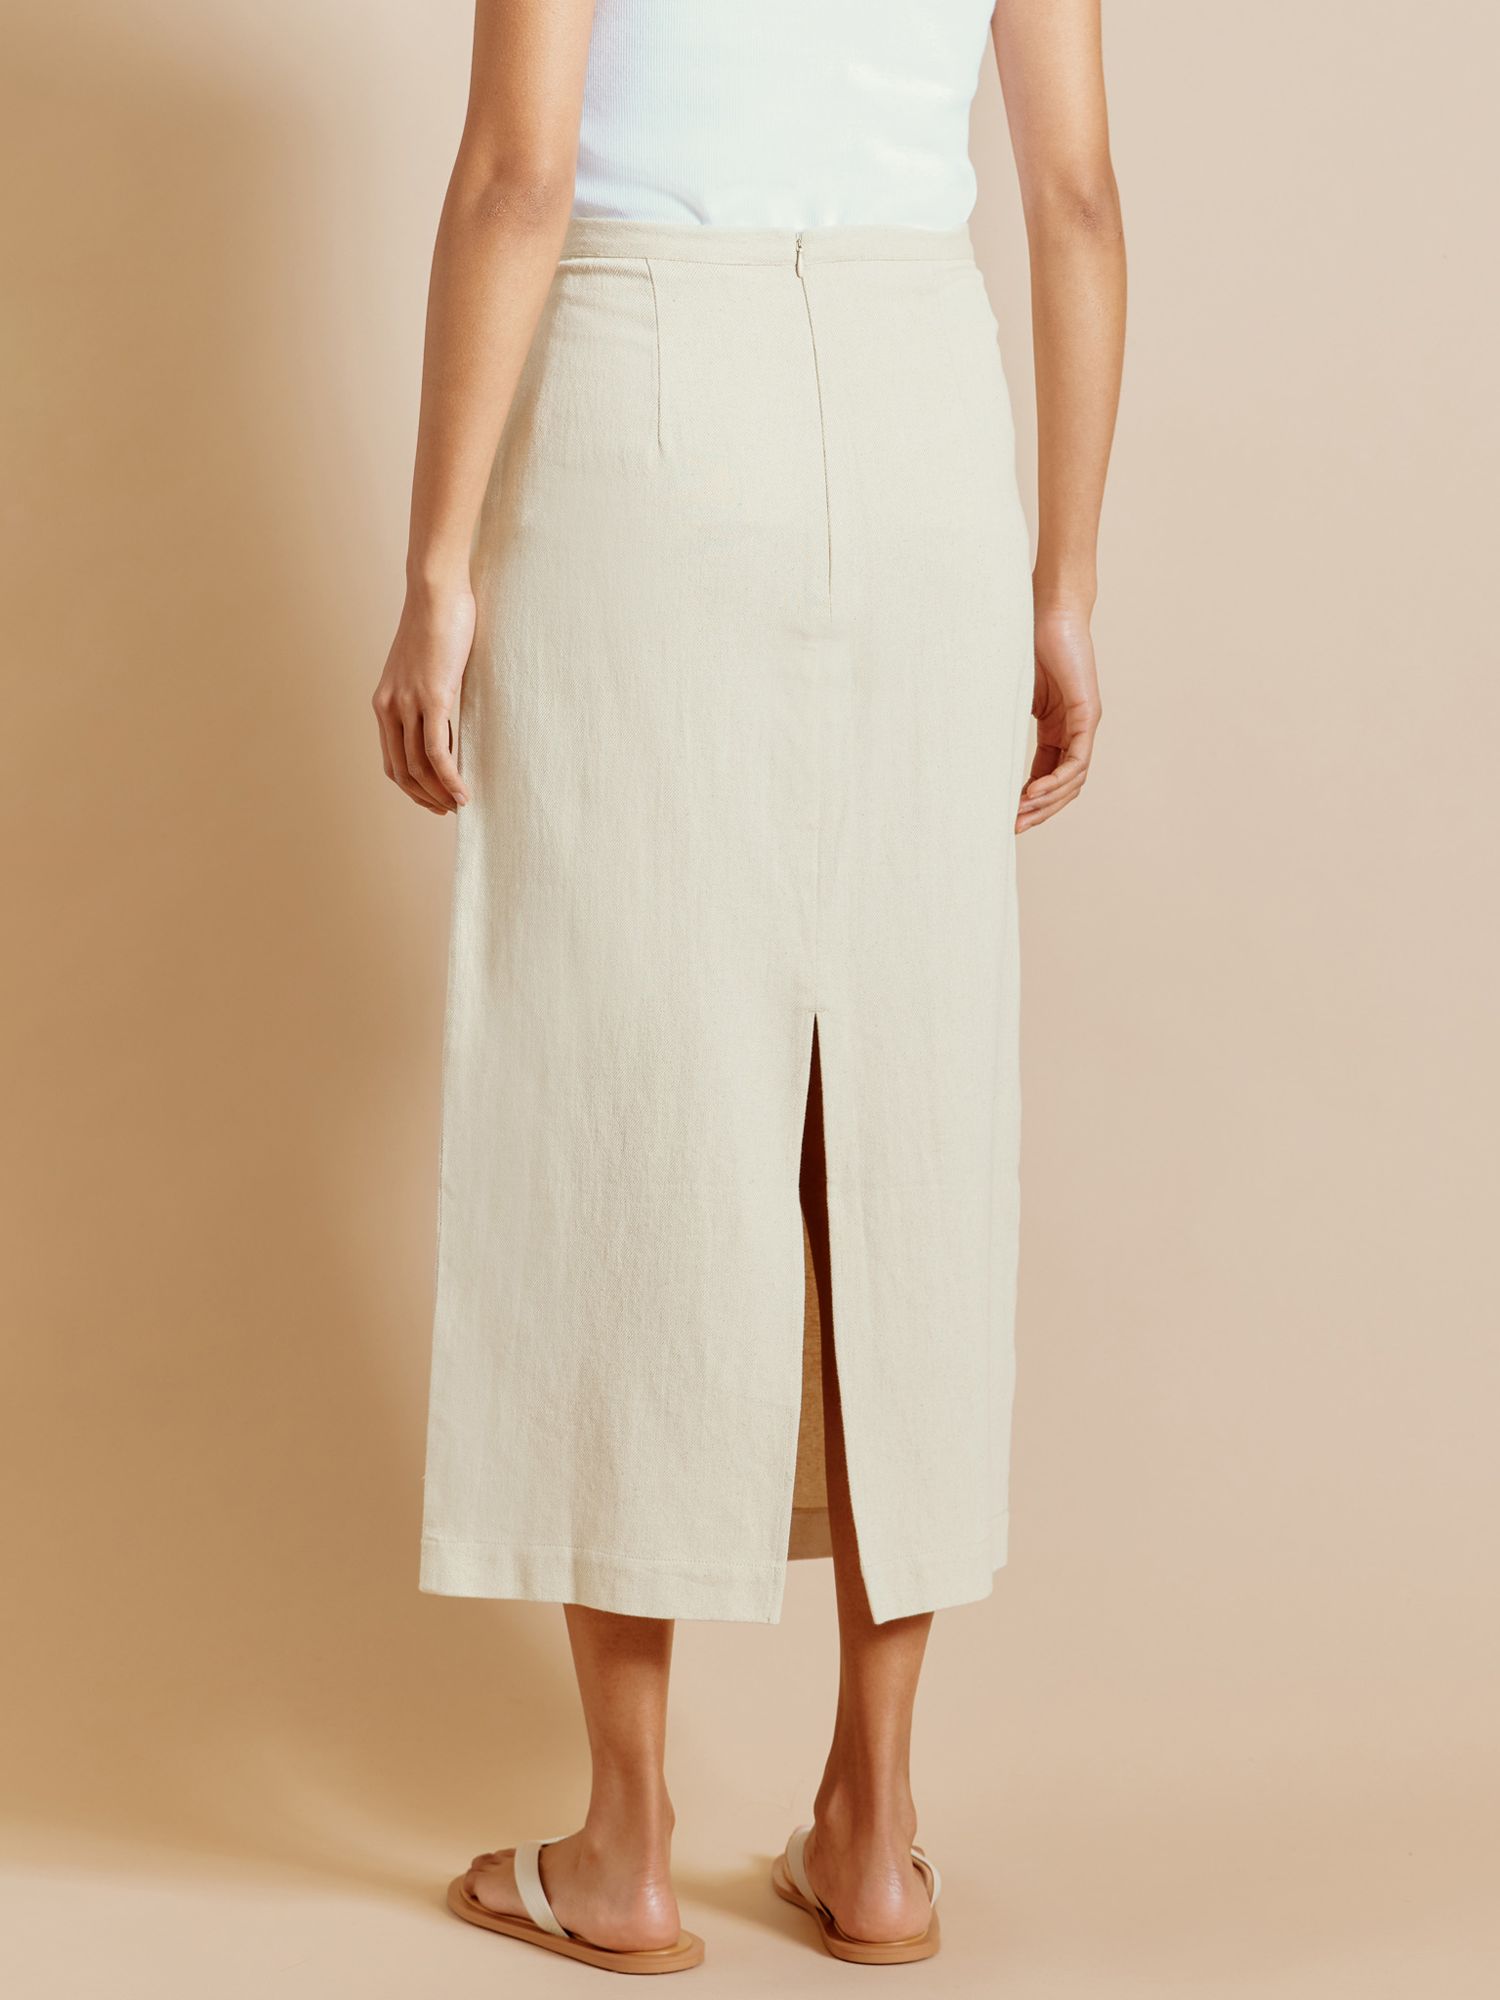 Albaray Linen Twill Blend Midi Pencil Skirt, Sand, 12